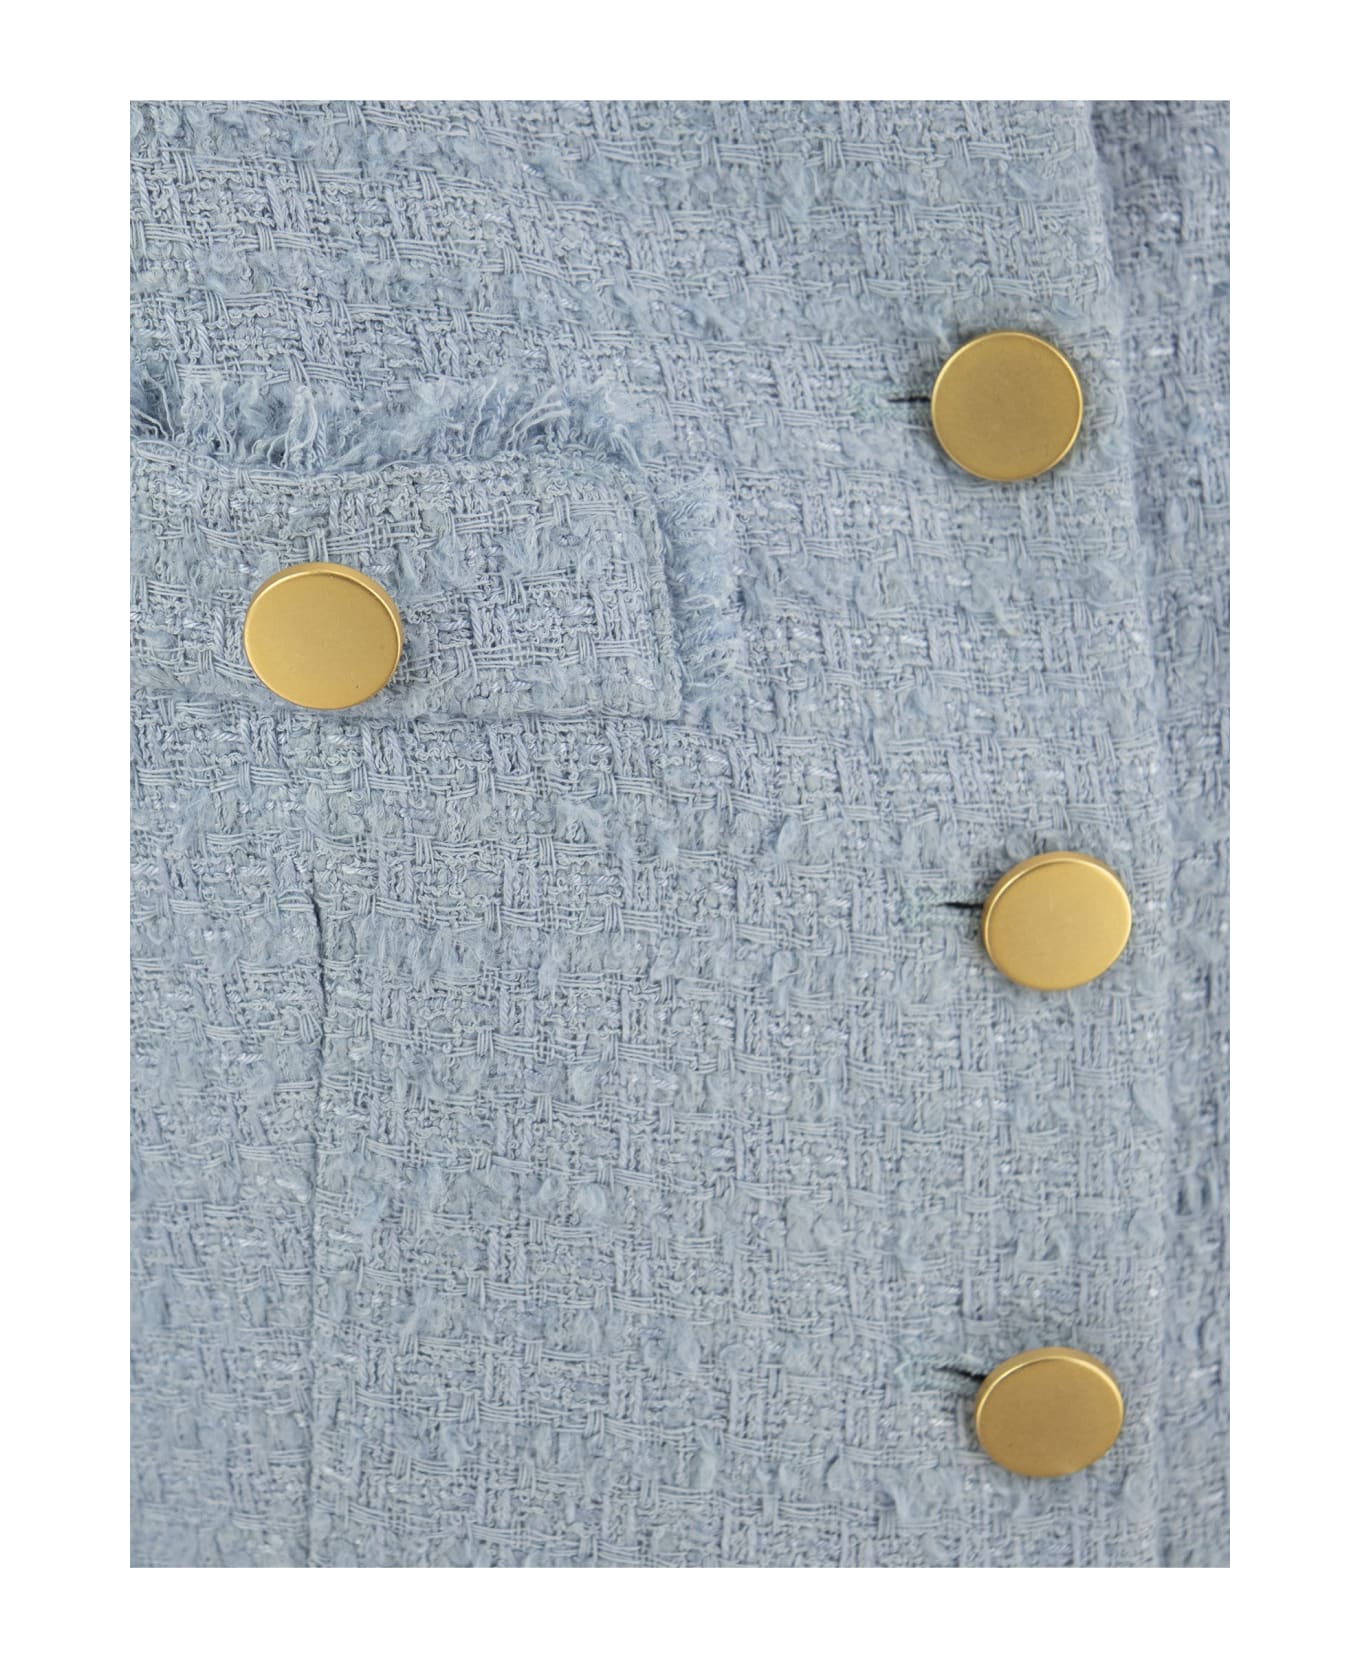 Tagliatore Rosy - Cropped Tweed Jacket - Light Blue